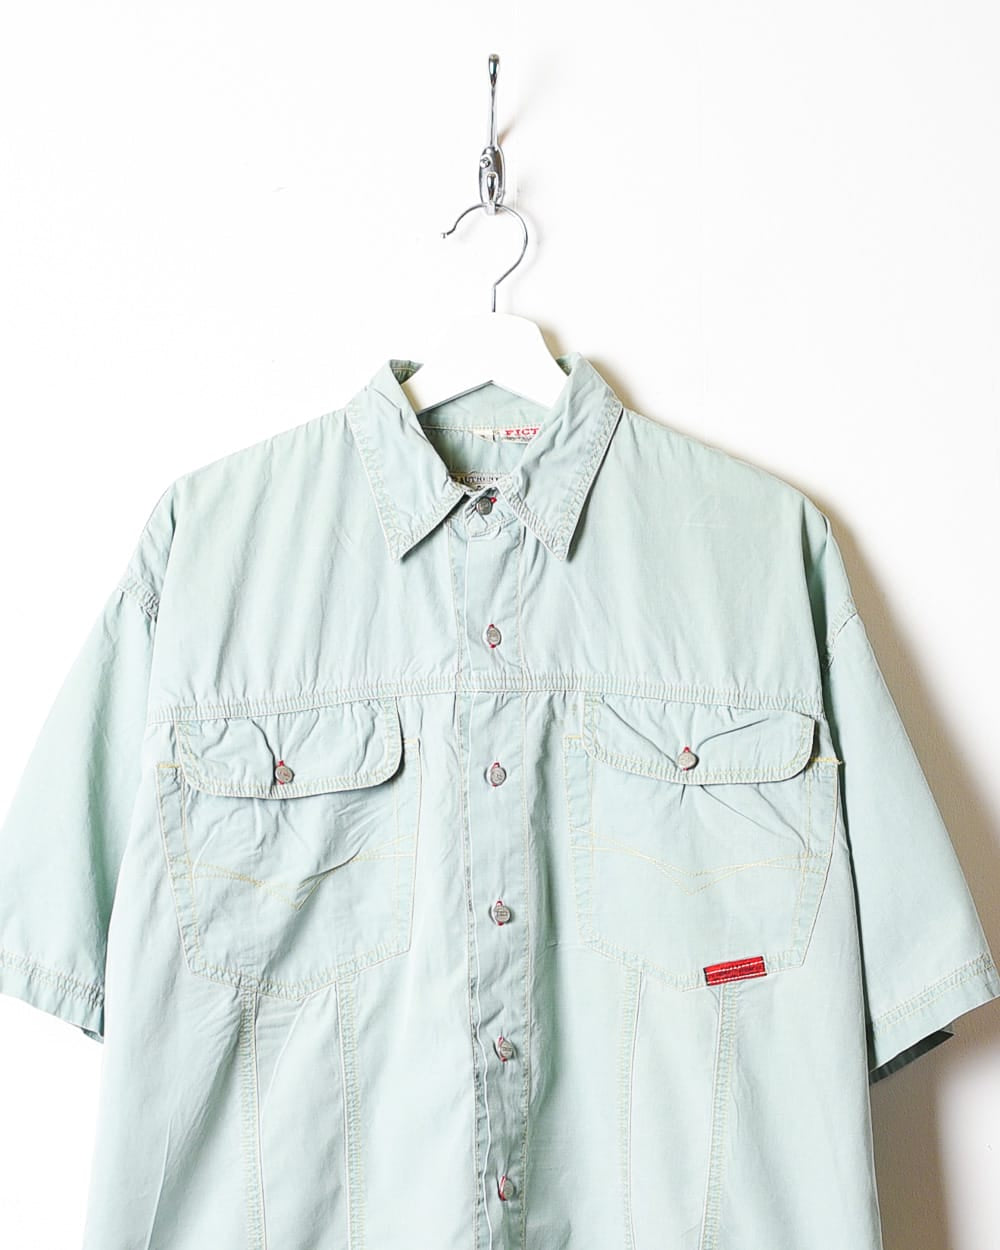 BabyBlue Double Pocket Striped Short Sleeved Shirt - Medium